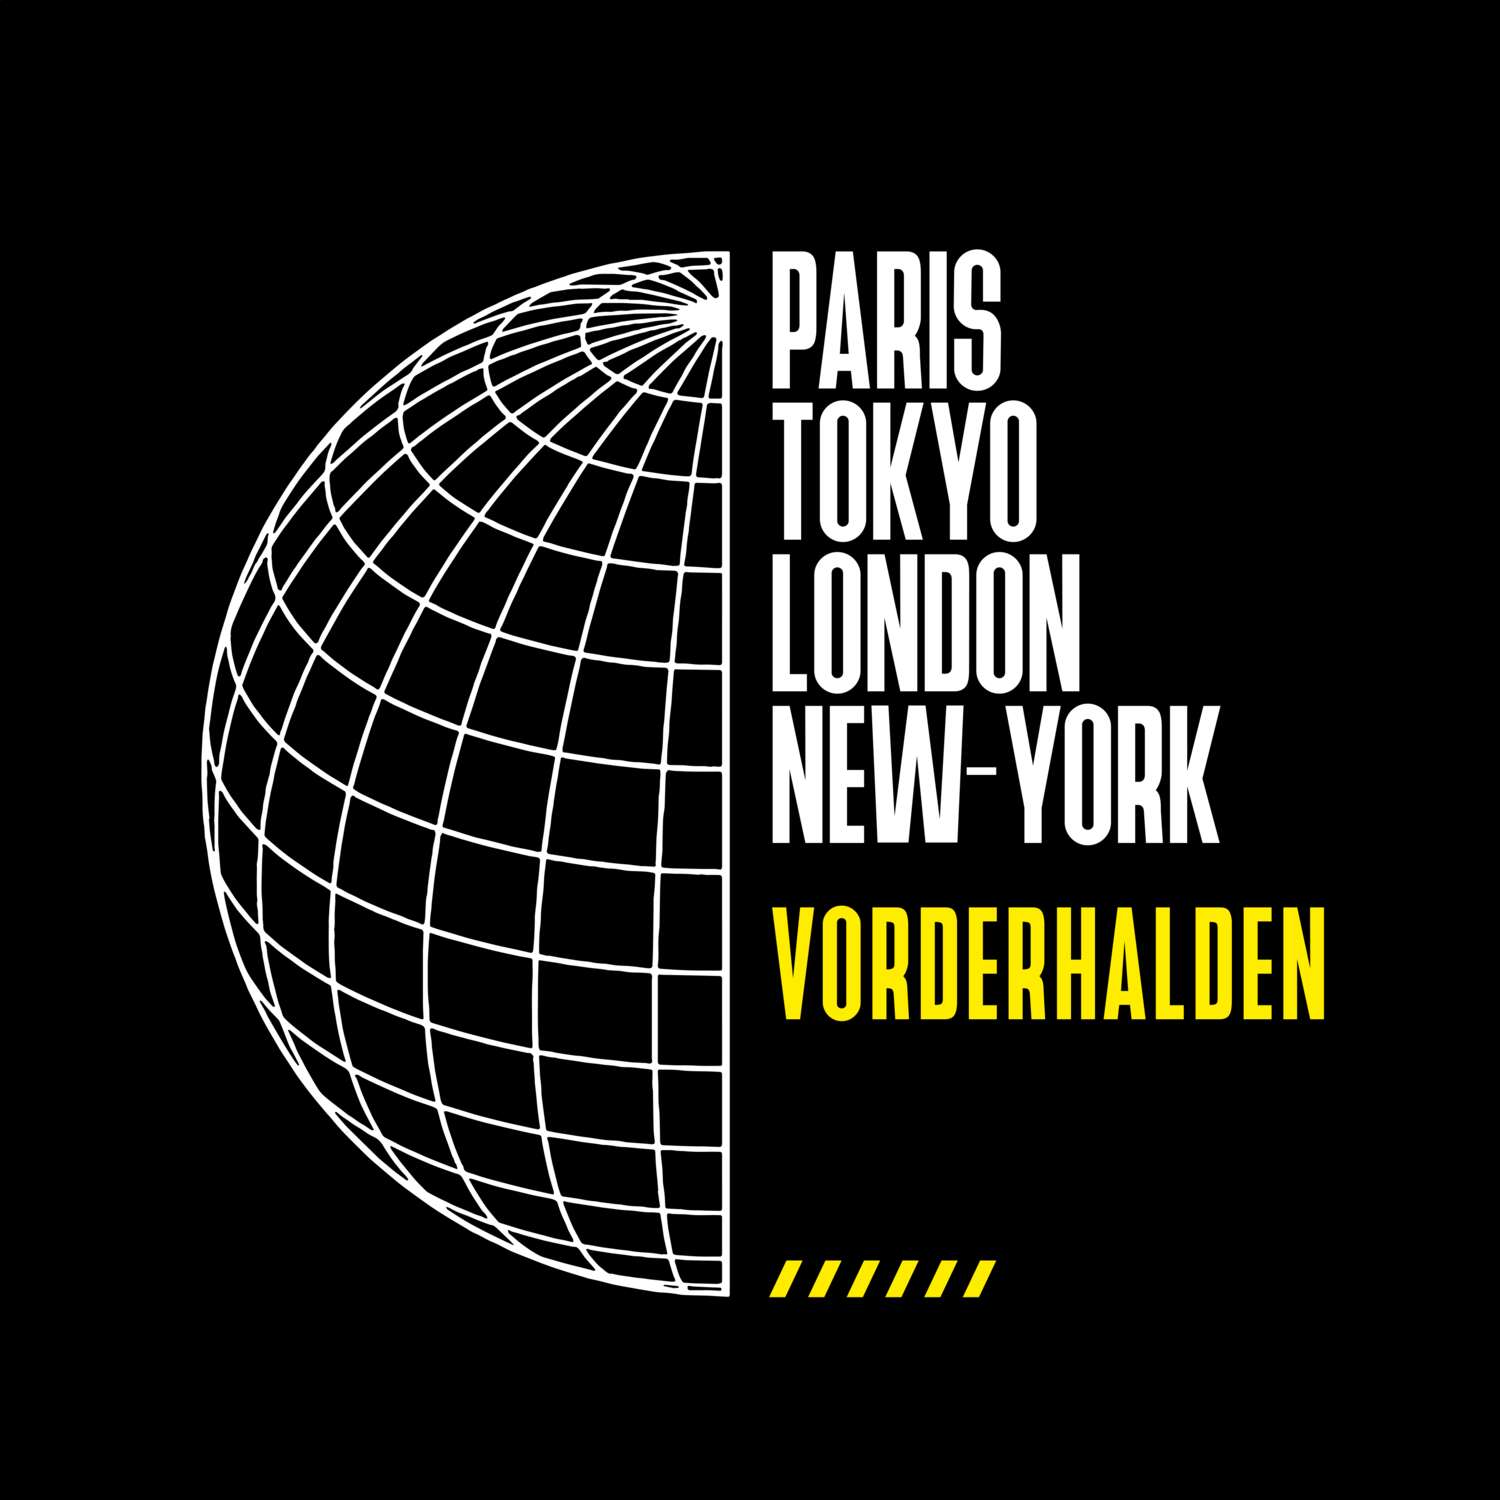 Vorderhalden T-Shirt »Paris Tokyo London«